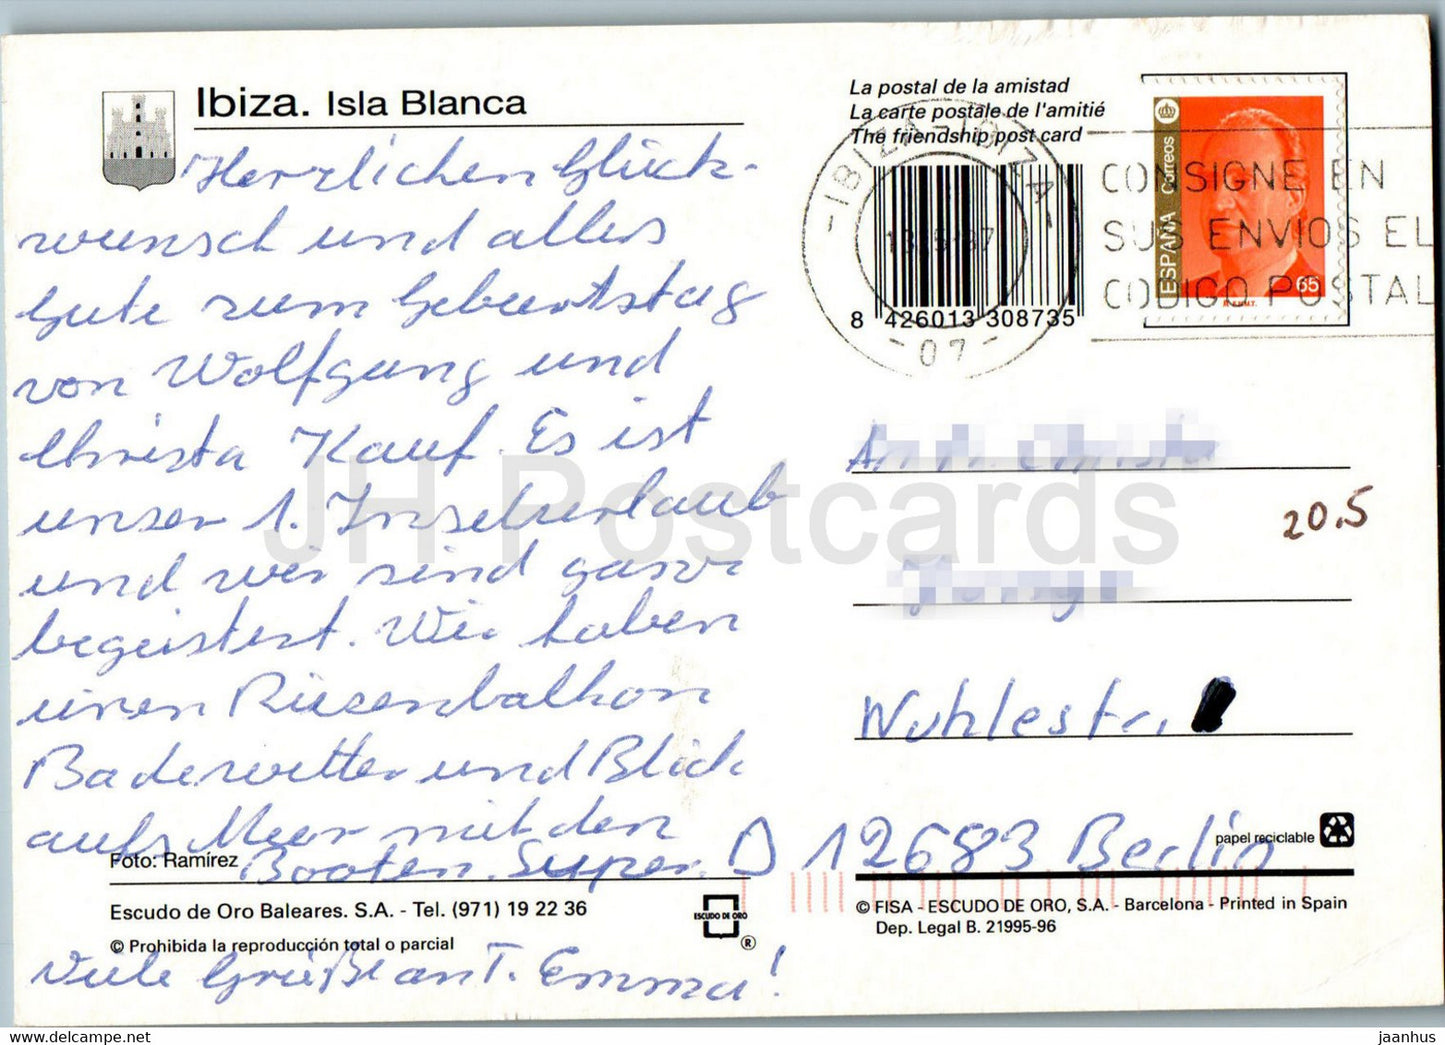 Ibiza - Isla Blanca - Talamanca - Spain - used